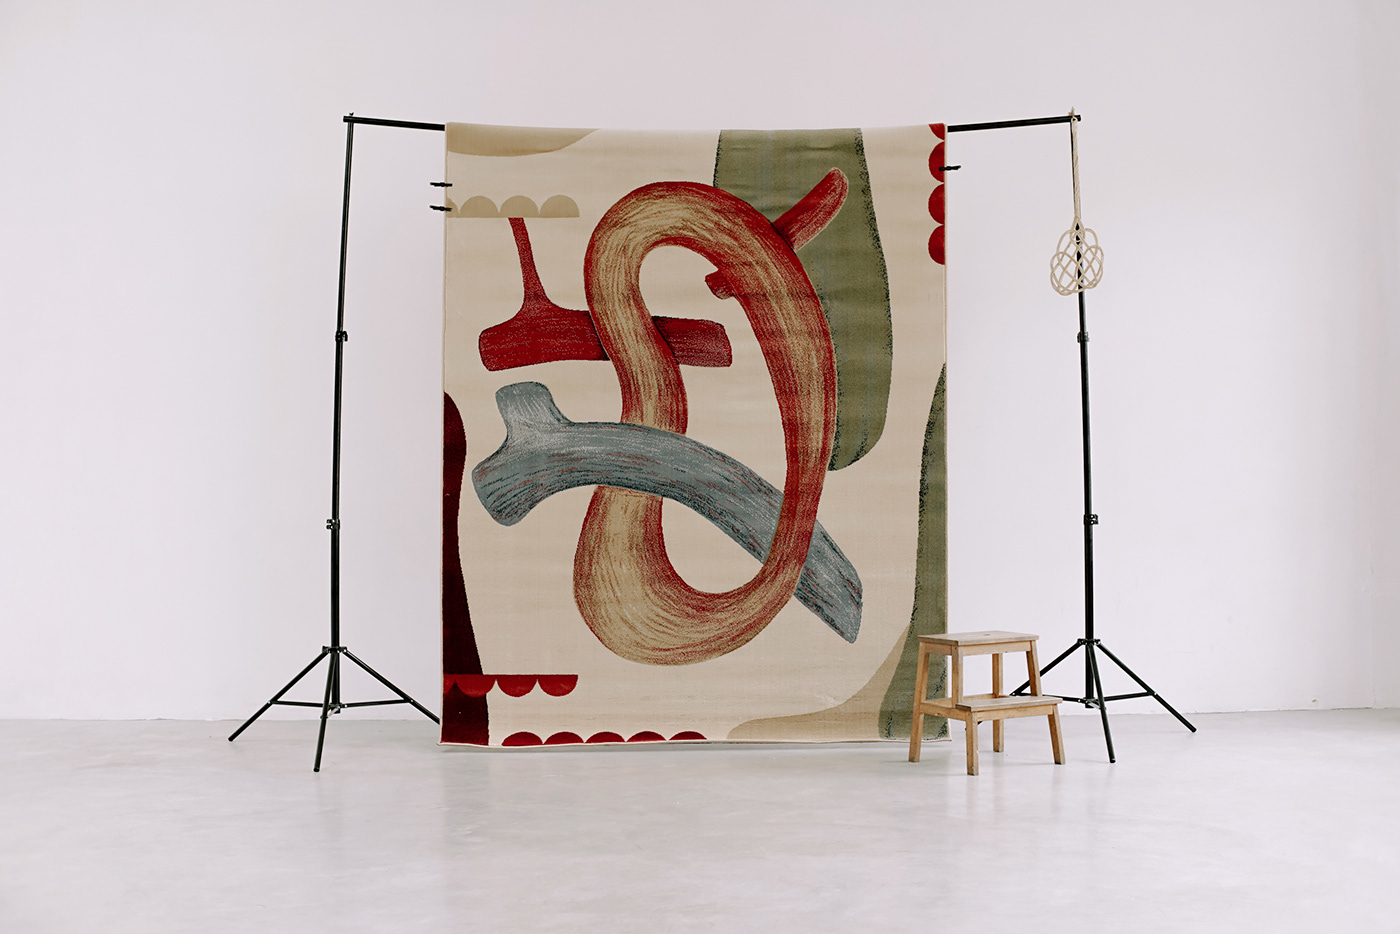 abstract abstraction art carpet design Interior Rug rugs ukraine ukrainian